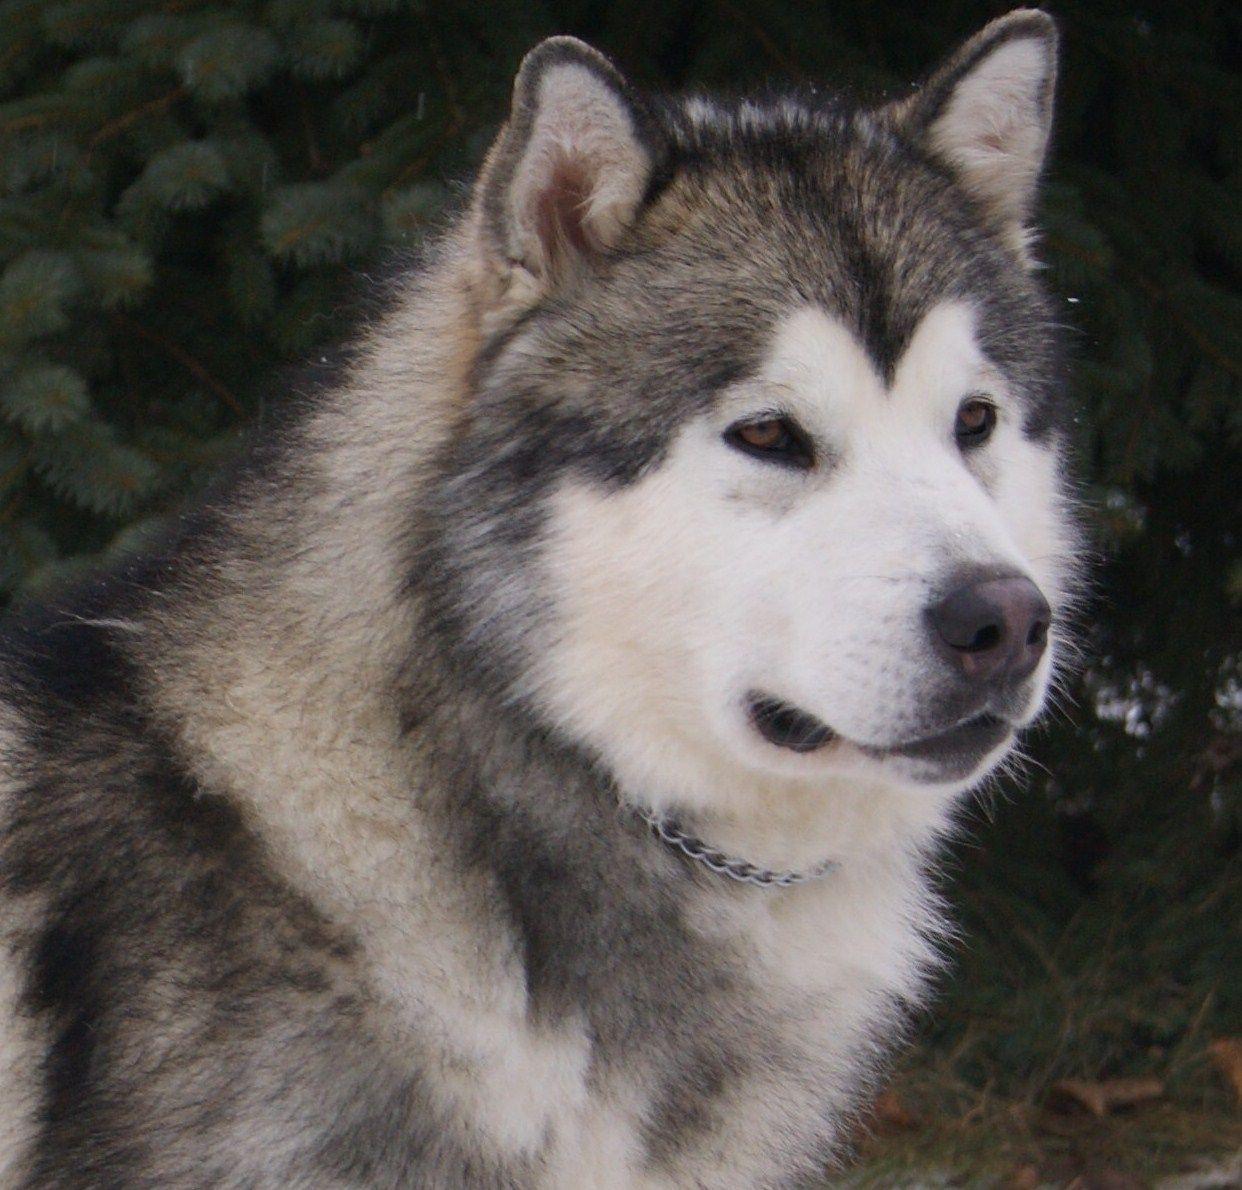 Grey Alaskan Malamute dog photo and wallpaper. Beautiful Grey